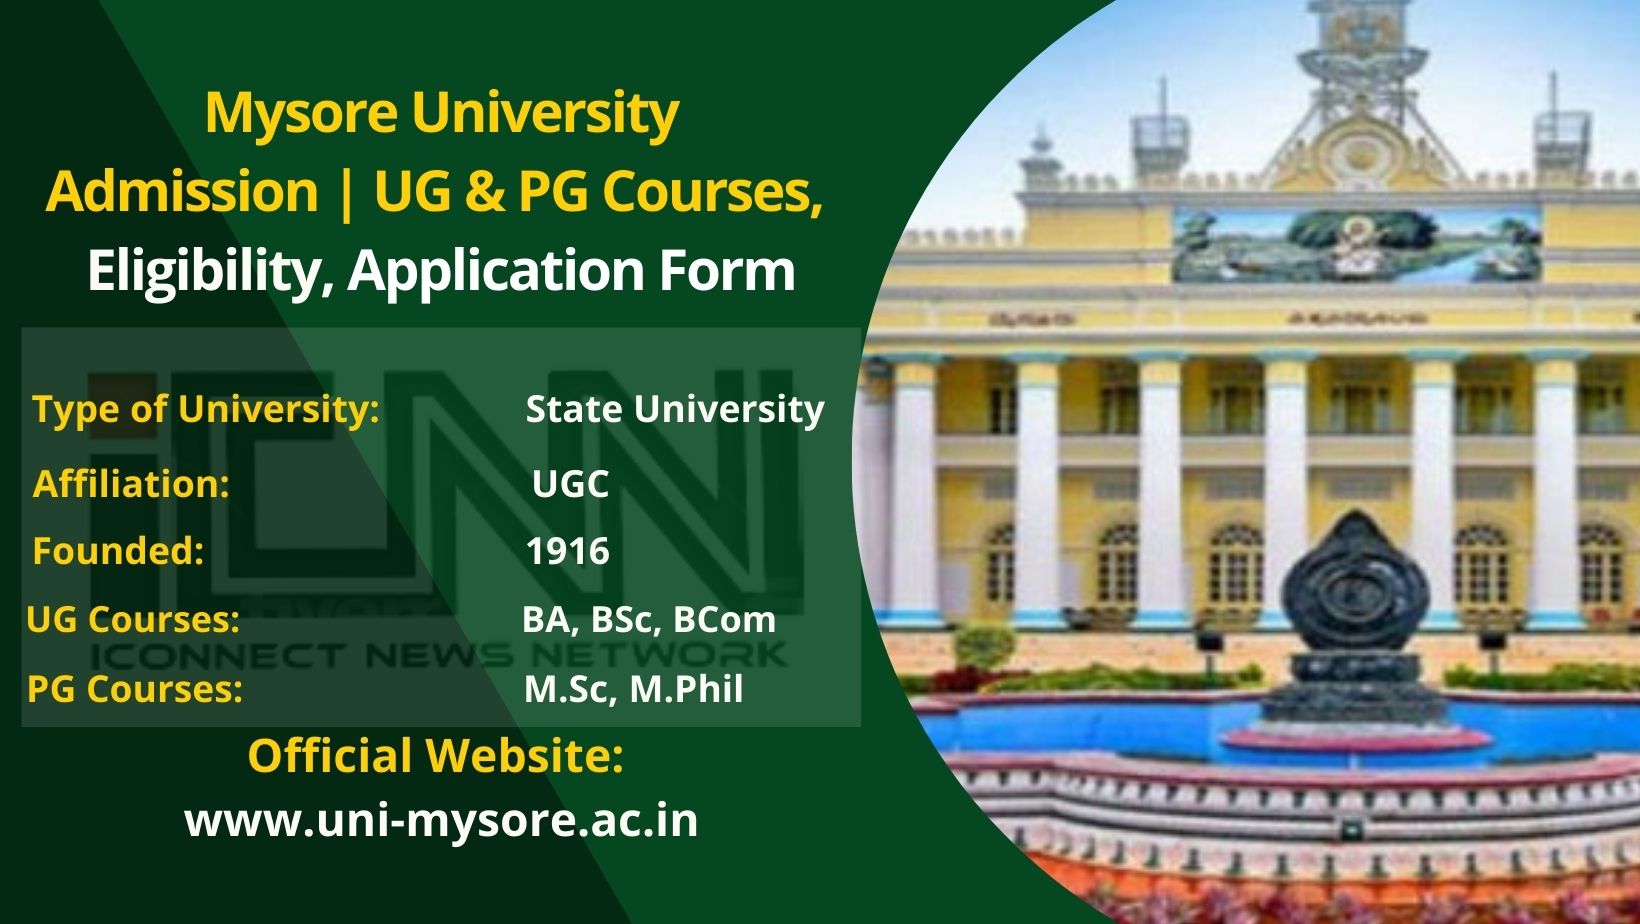 university of mysore phd course work